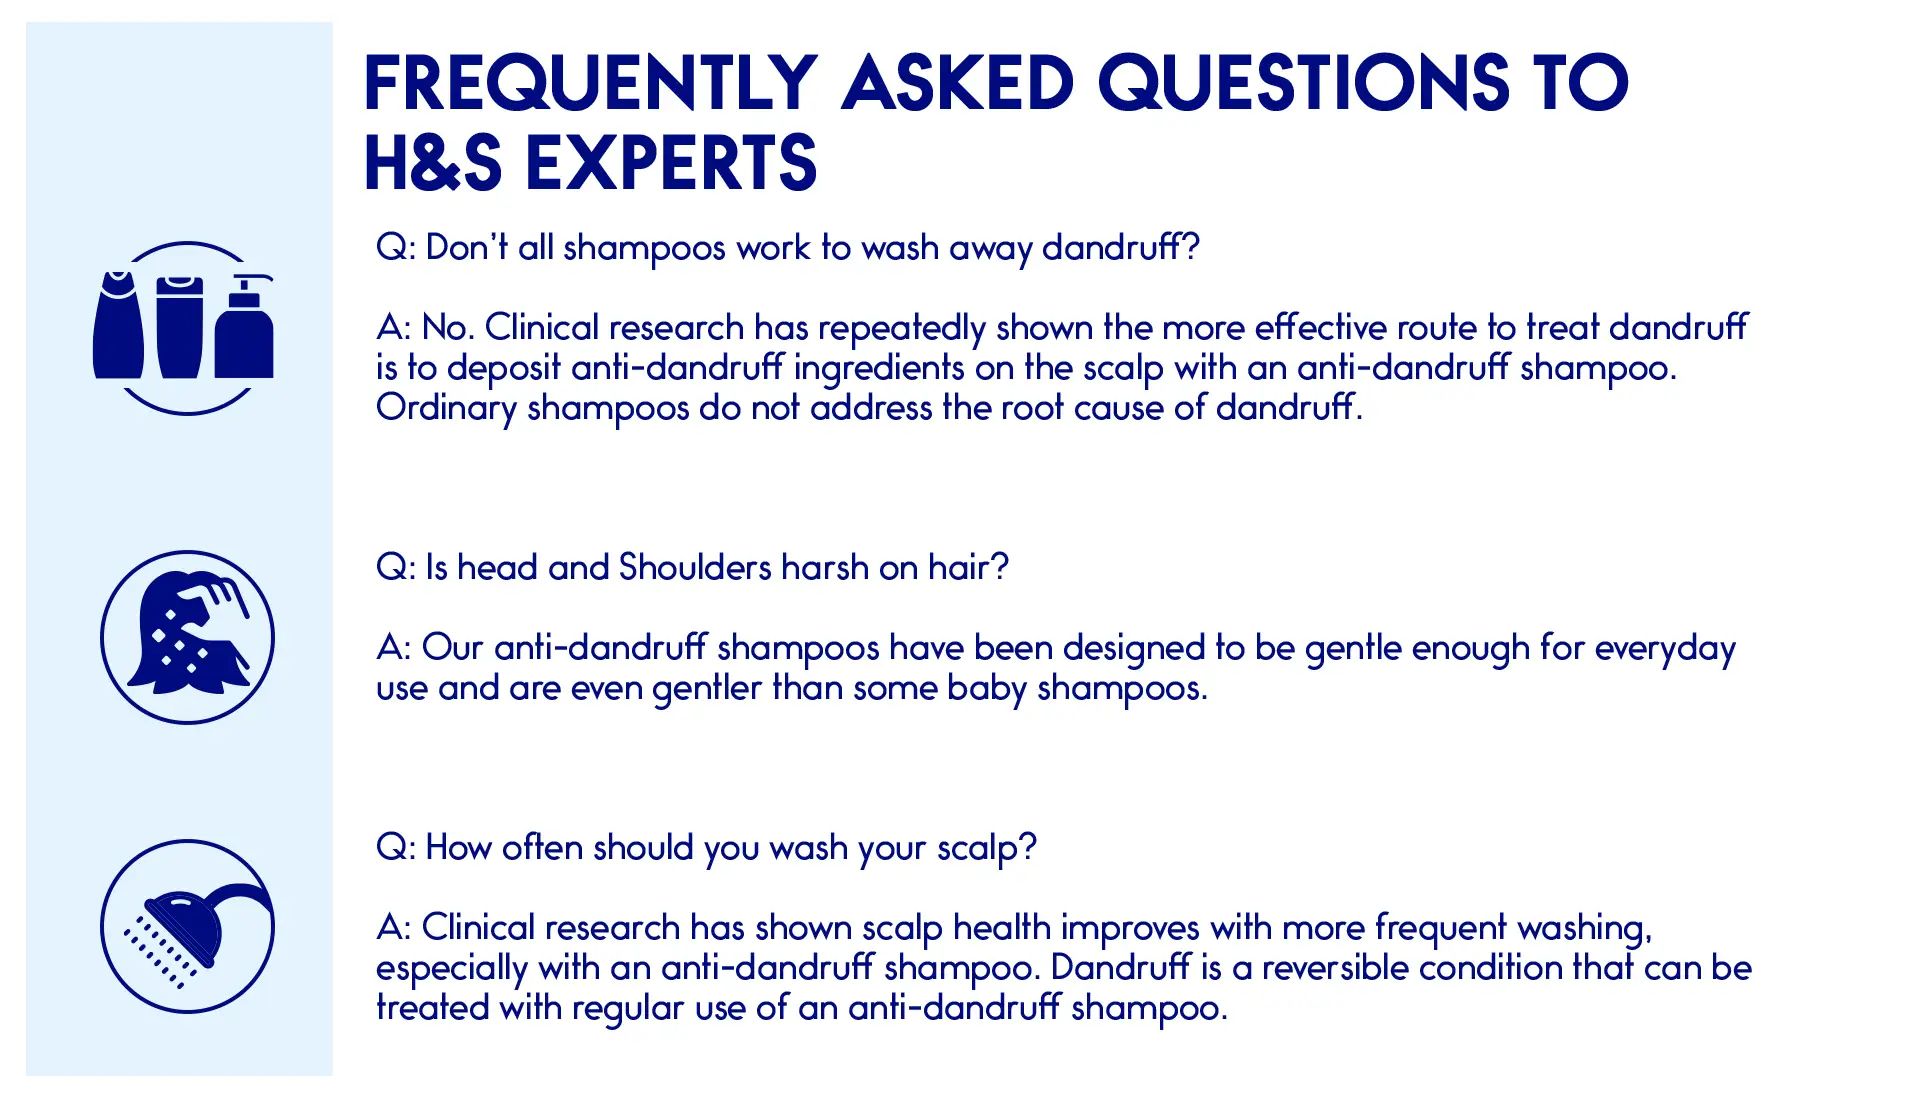 Head & Shoulders Classic Clean Anti-Dandruff Shampoo, 200 ml